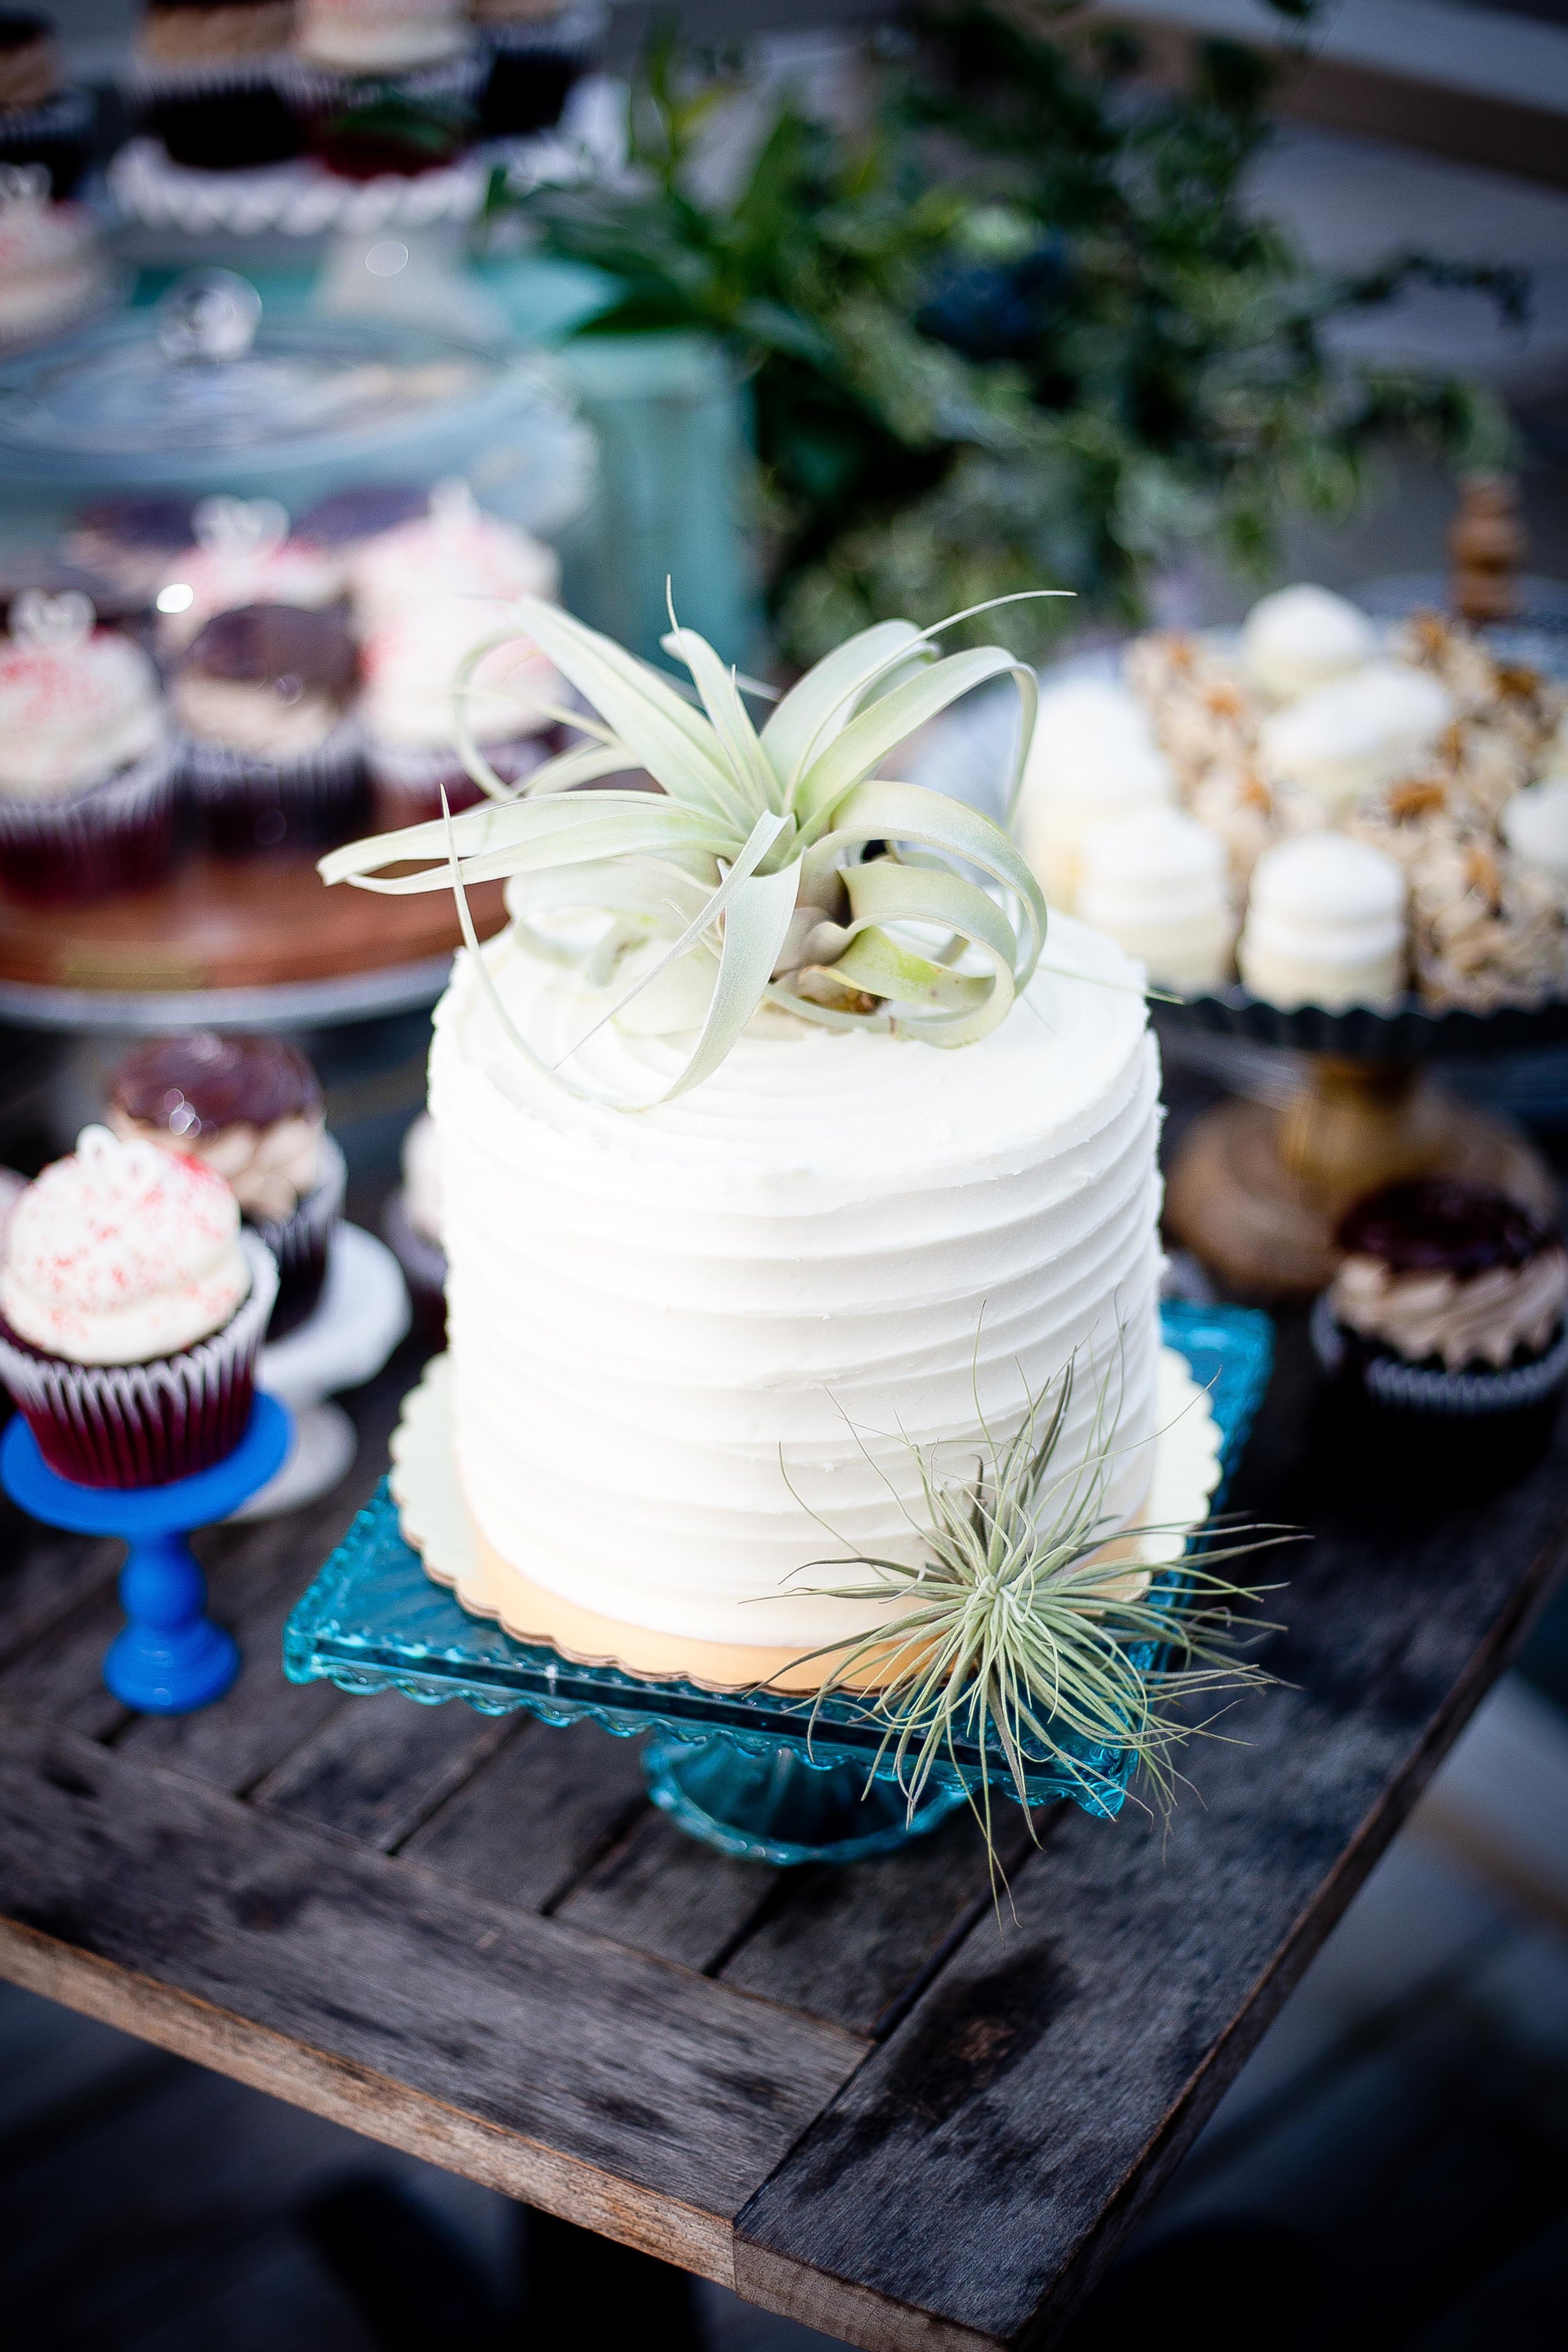 Tina-and-Javin-Wedding-Wedding-Cake-Savannah-Bakery-GiGis-Cupcakes-RedVelvet-Airplant-Savannah-Planner-Ivory-and-Beau-Succulent-Cakes-Natural-Caketoppers-Wyld-Dock-Bar-Bride-Wedding-Deserts-Cupcakes-Airplant-Wedding-Caketopper--jpg.jpg